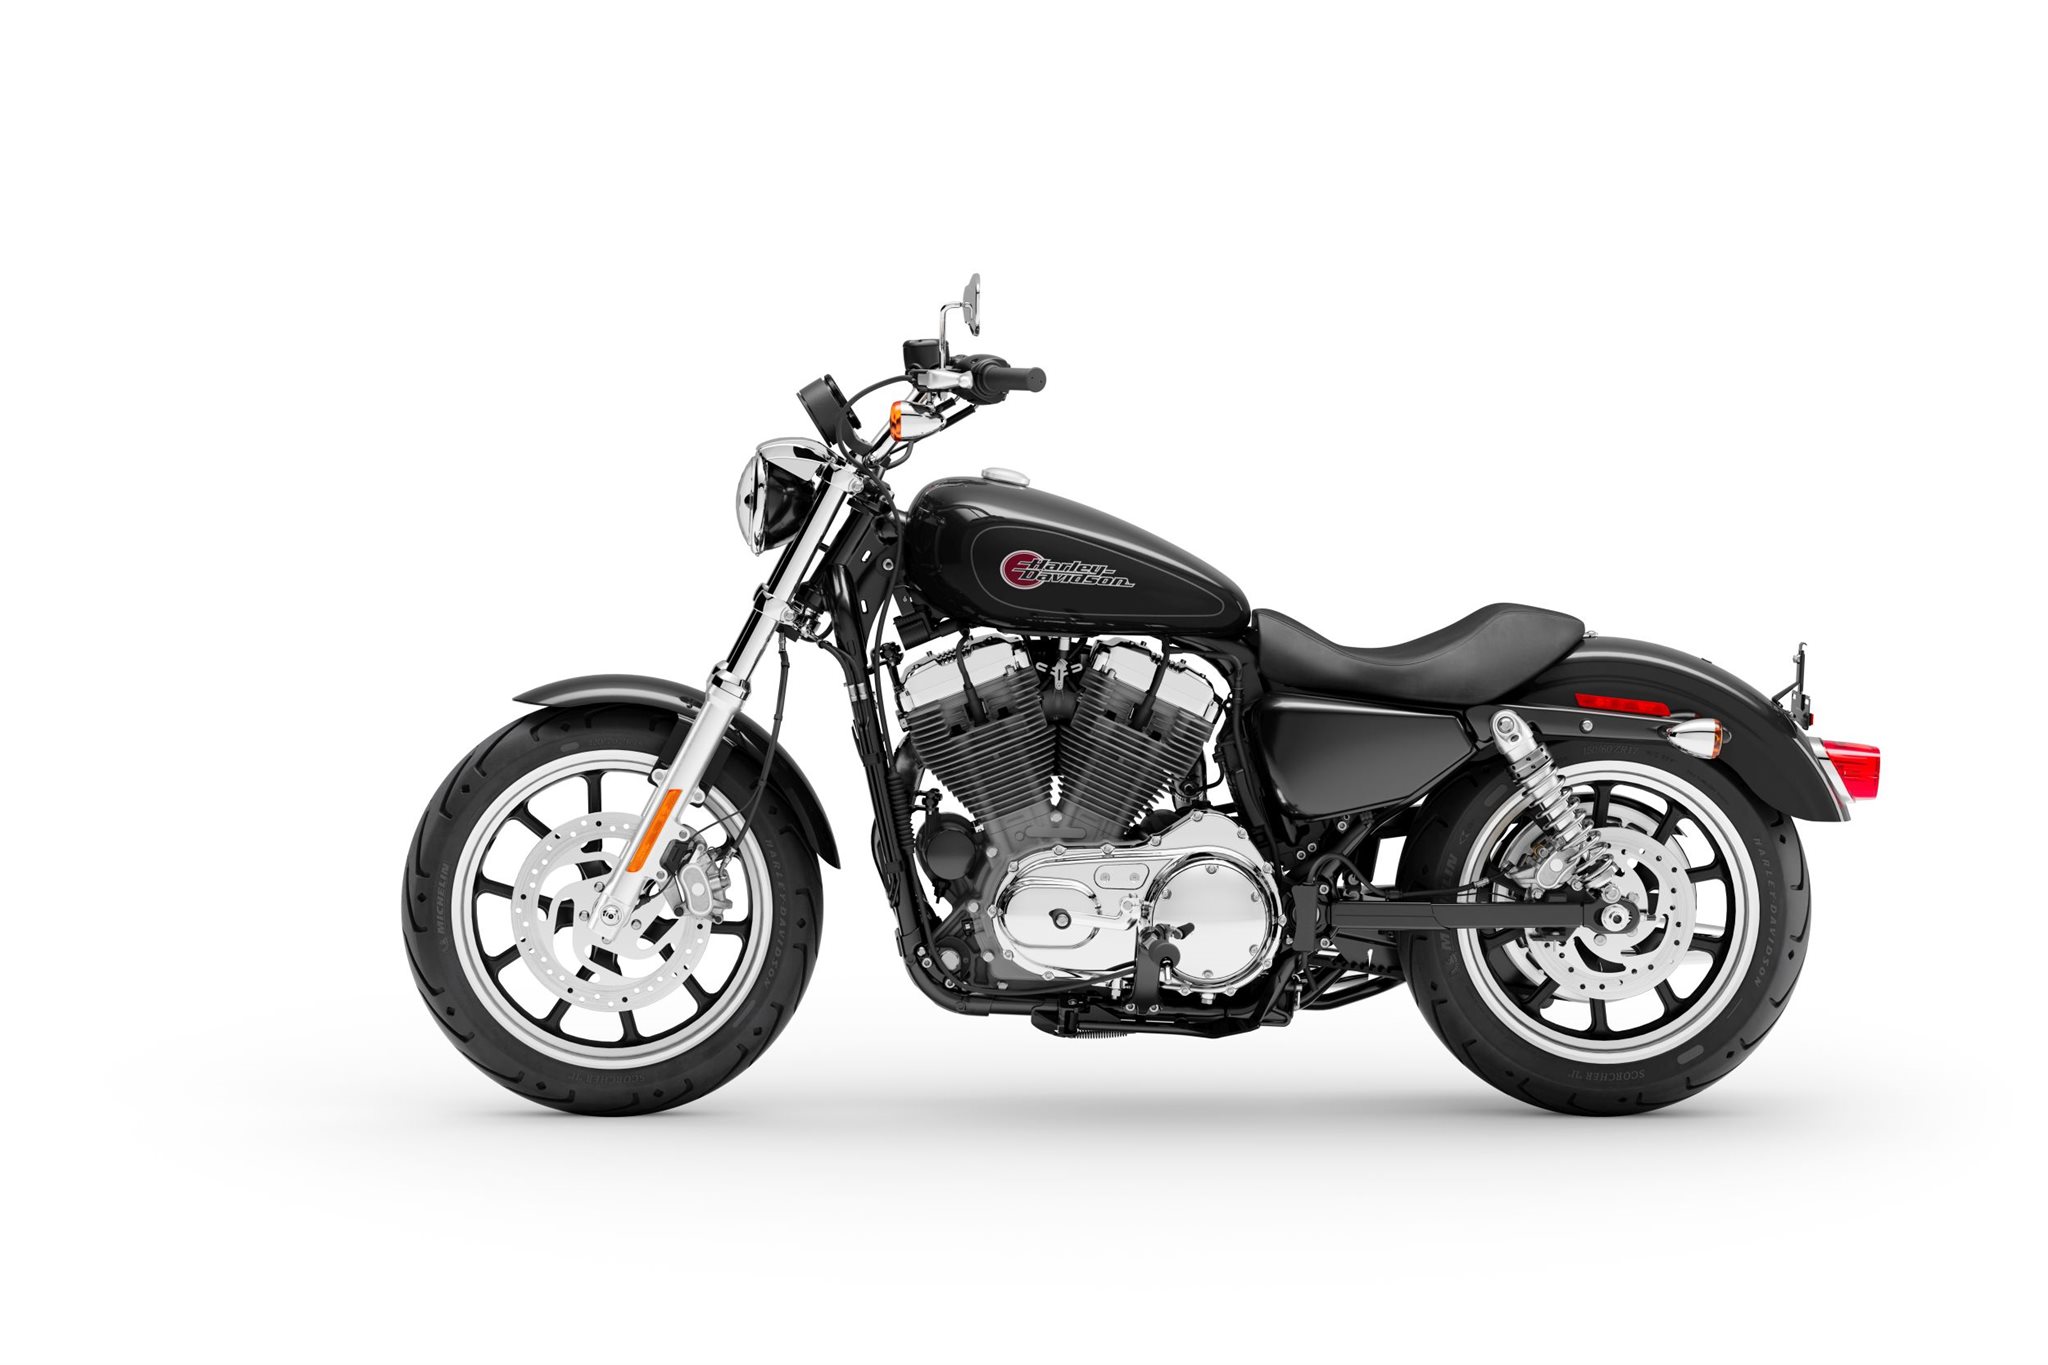 Motorrad Vergleich Harley Davidson Sportster Xl 883 L Superlow 2019 Vs Harley Davidson Sportster Xl 883 L Superlow 2012